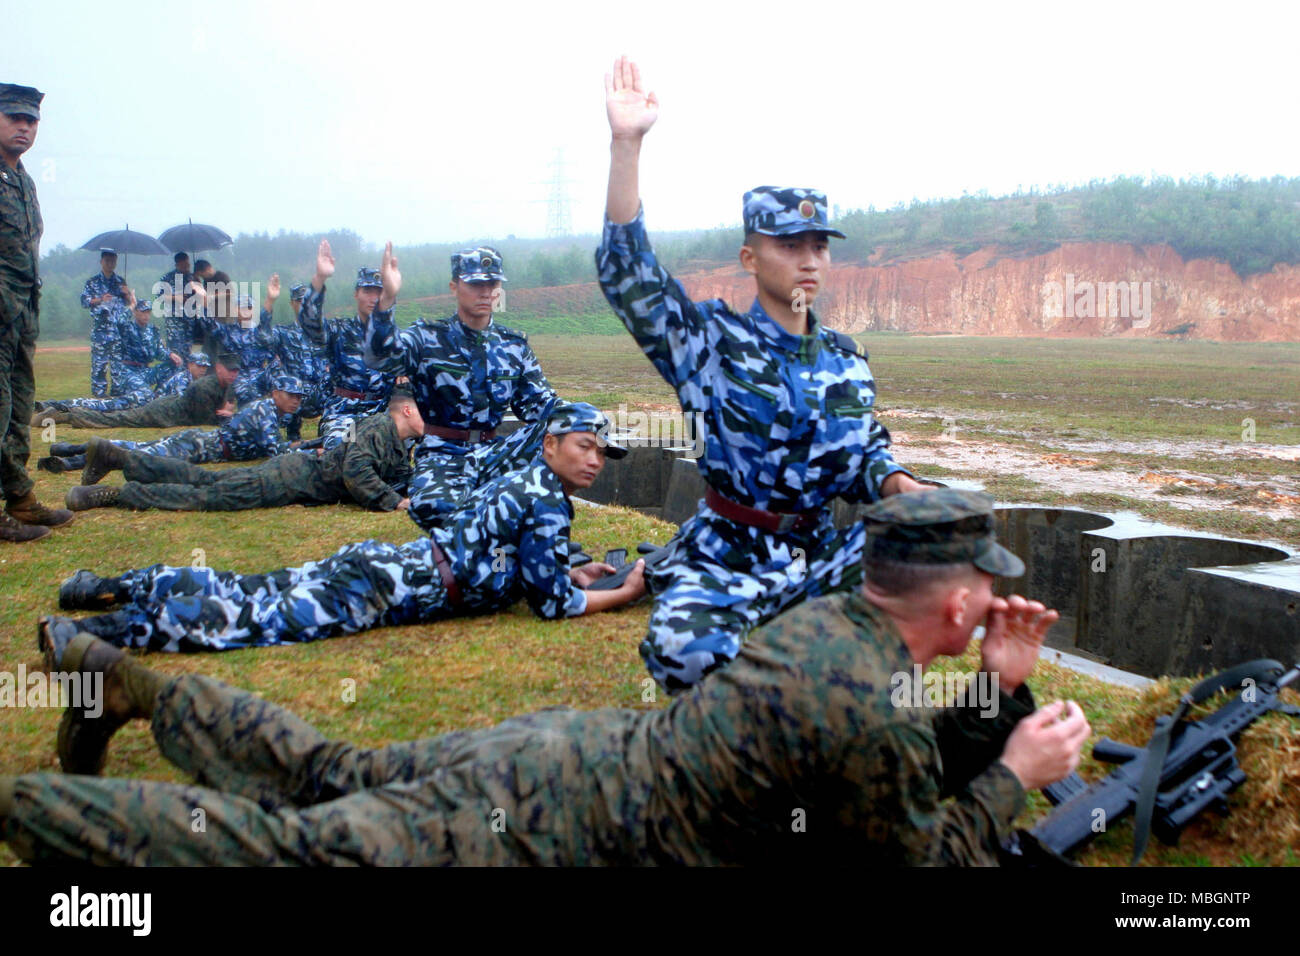 US & Chinese Marine at the Firing Range in China Stock Photo